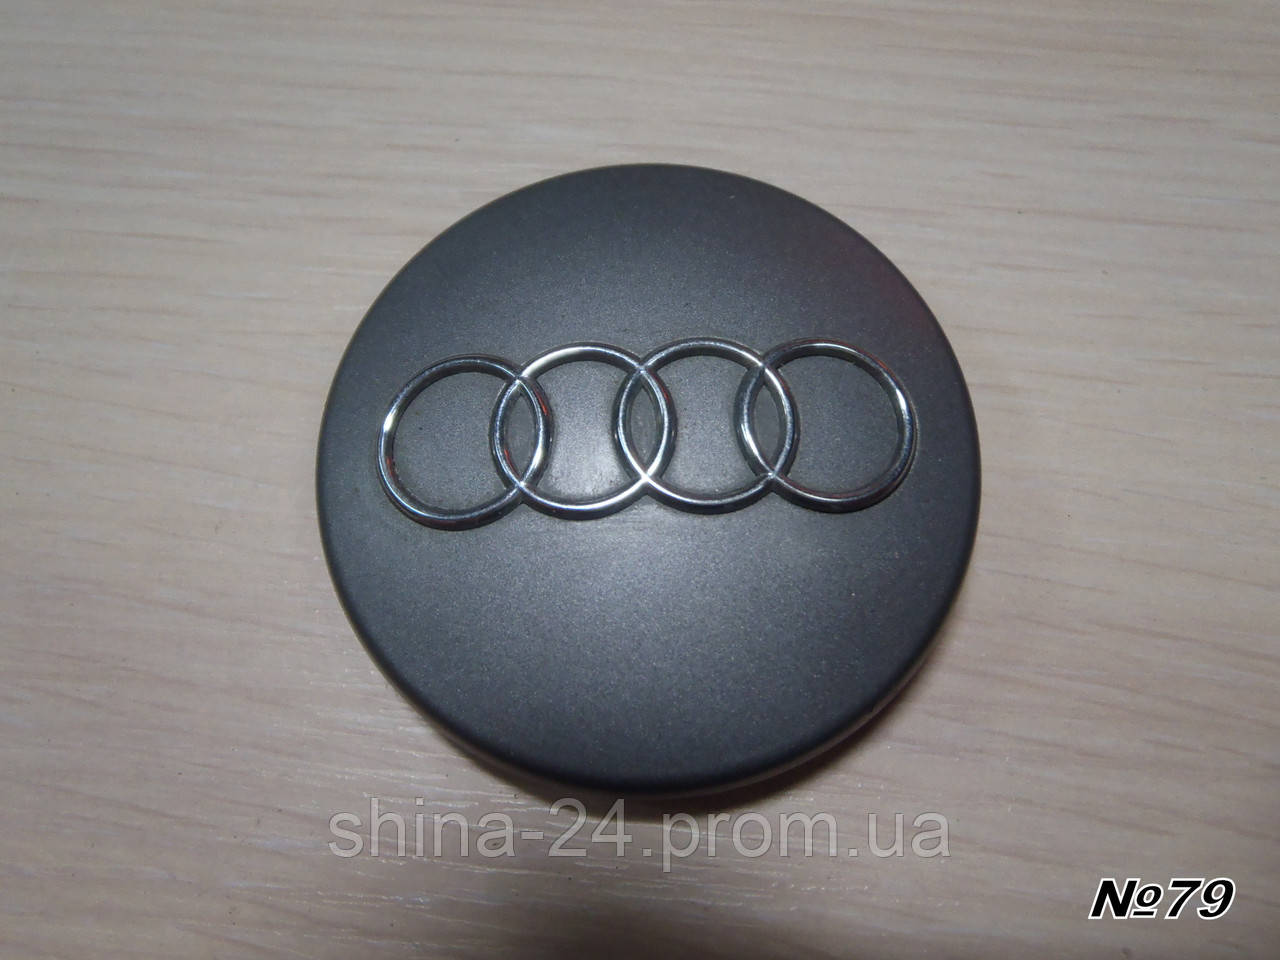 Оригинальные Колпачки заглушки на диски Audi/Ауди 8DO 601 170 68/56/9м